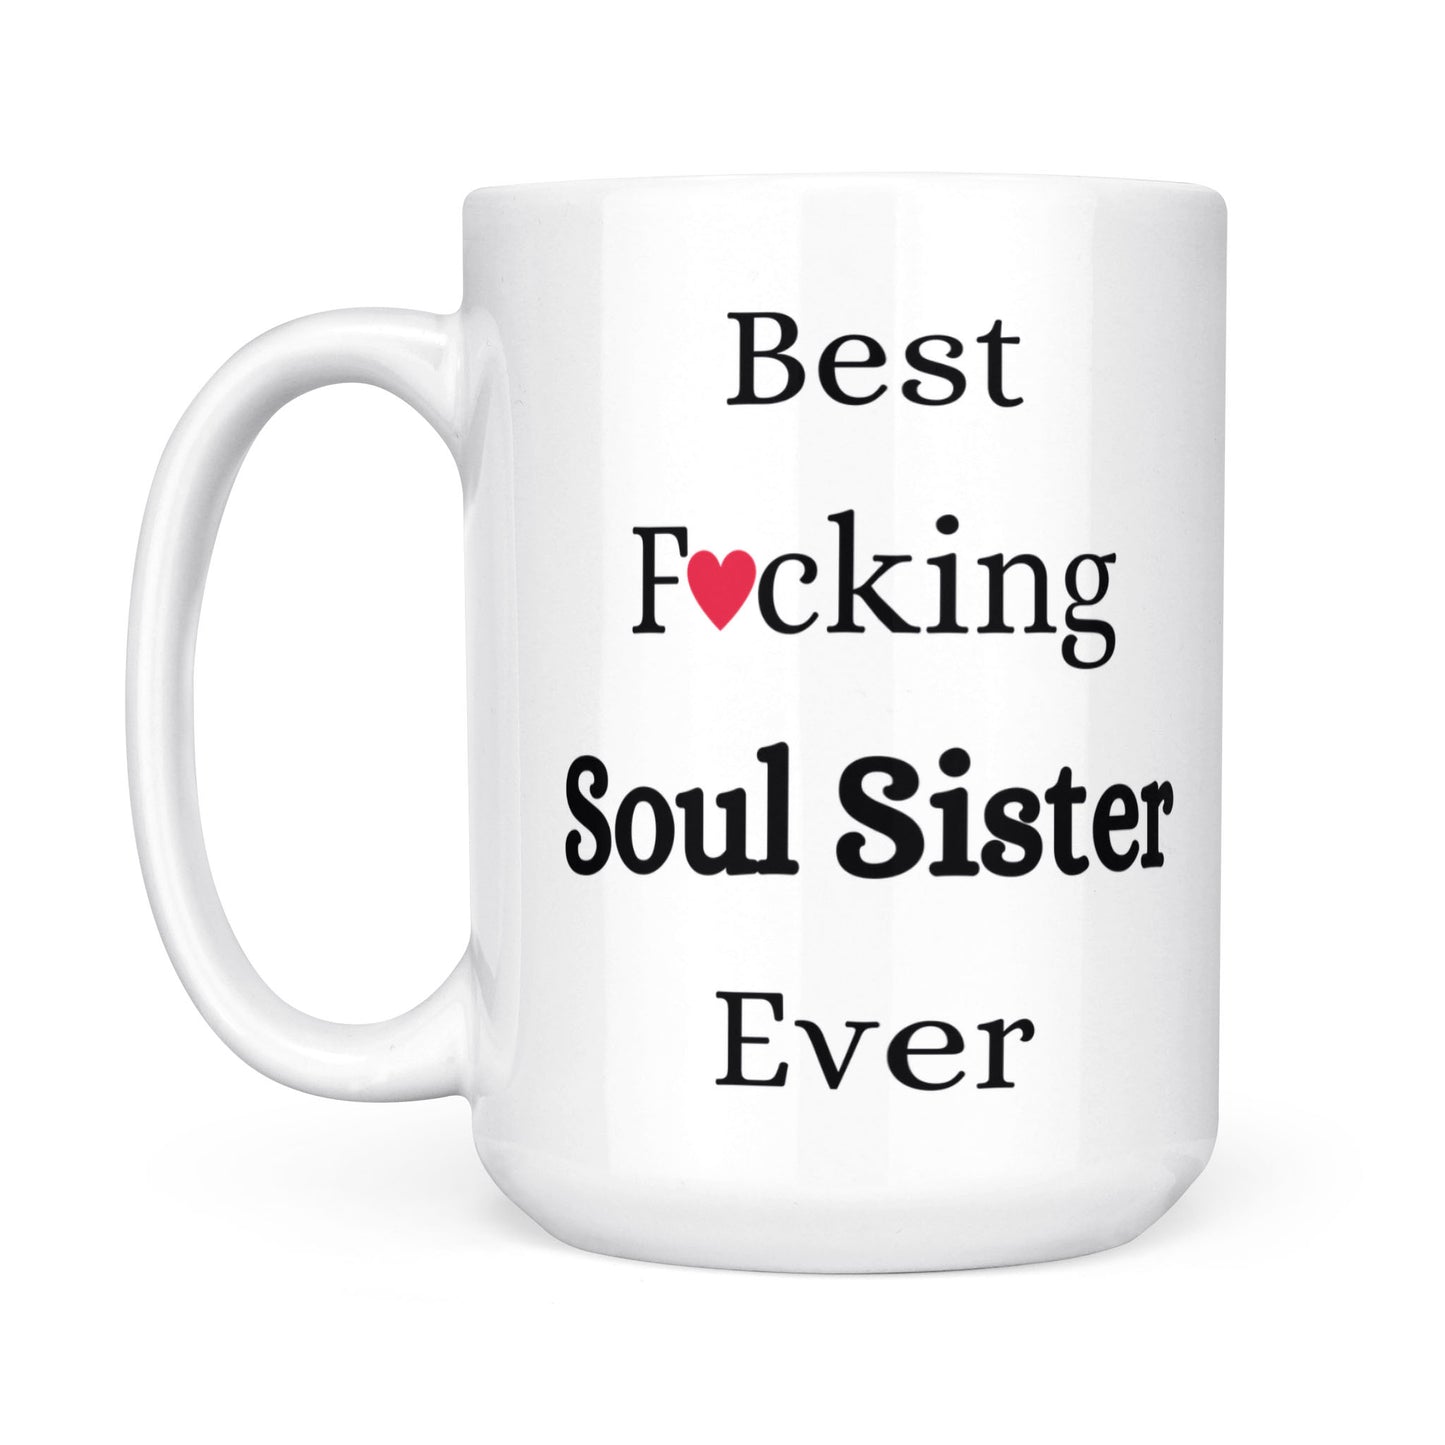 Soul Sister Ever Mug 15 oz